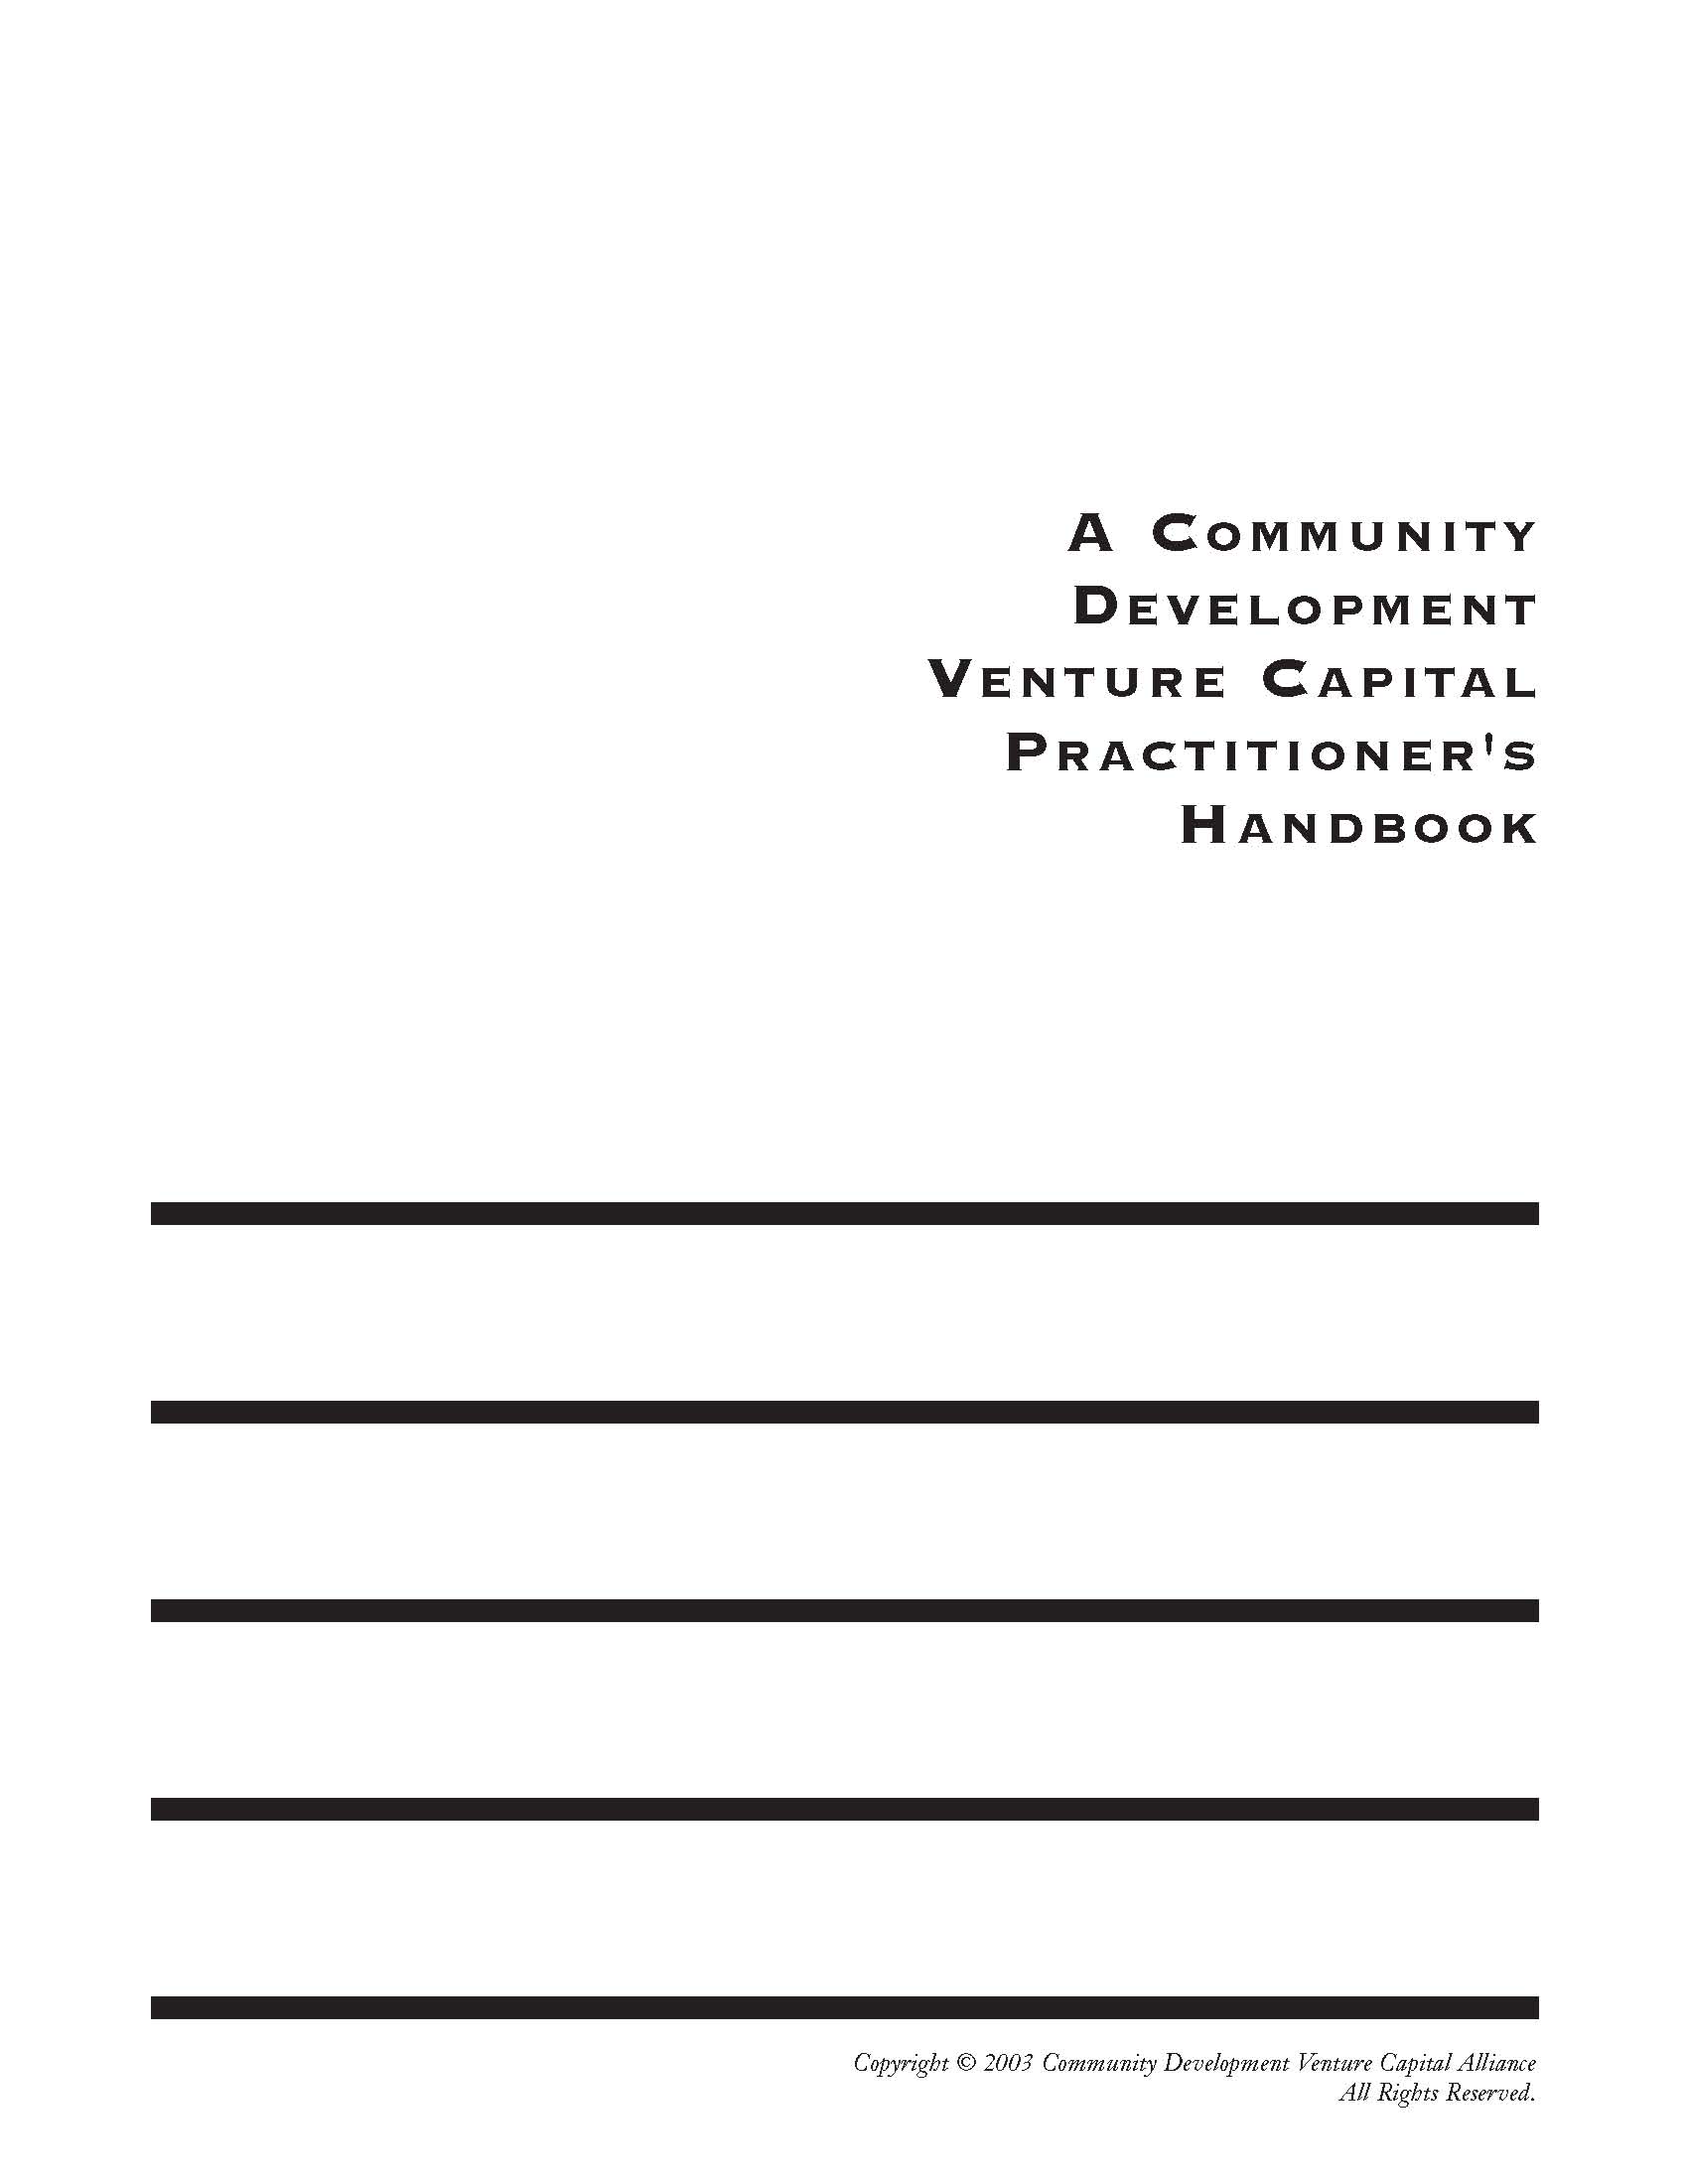 ... Community Development Venture Capital Practitionerâ€™s Handbook